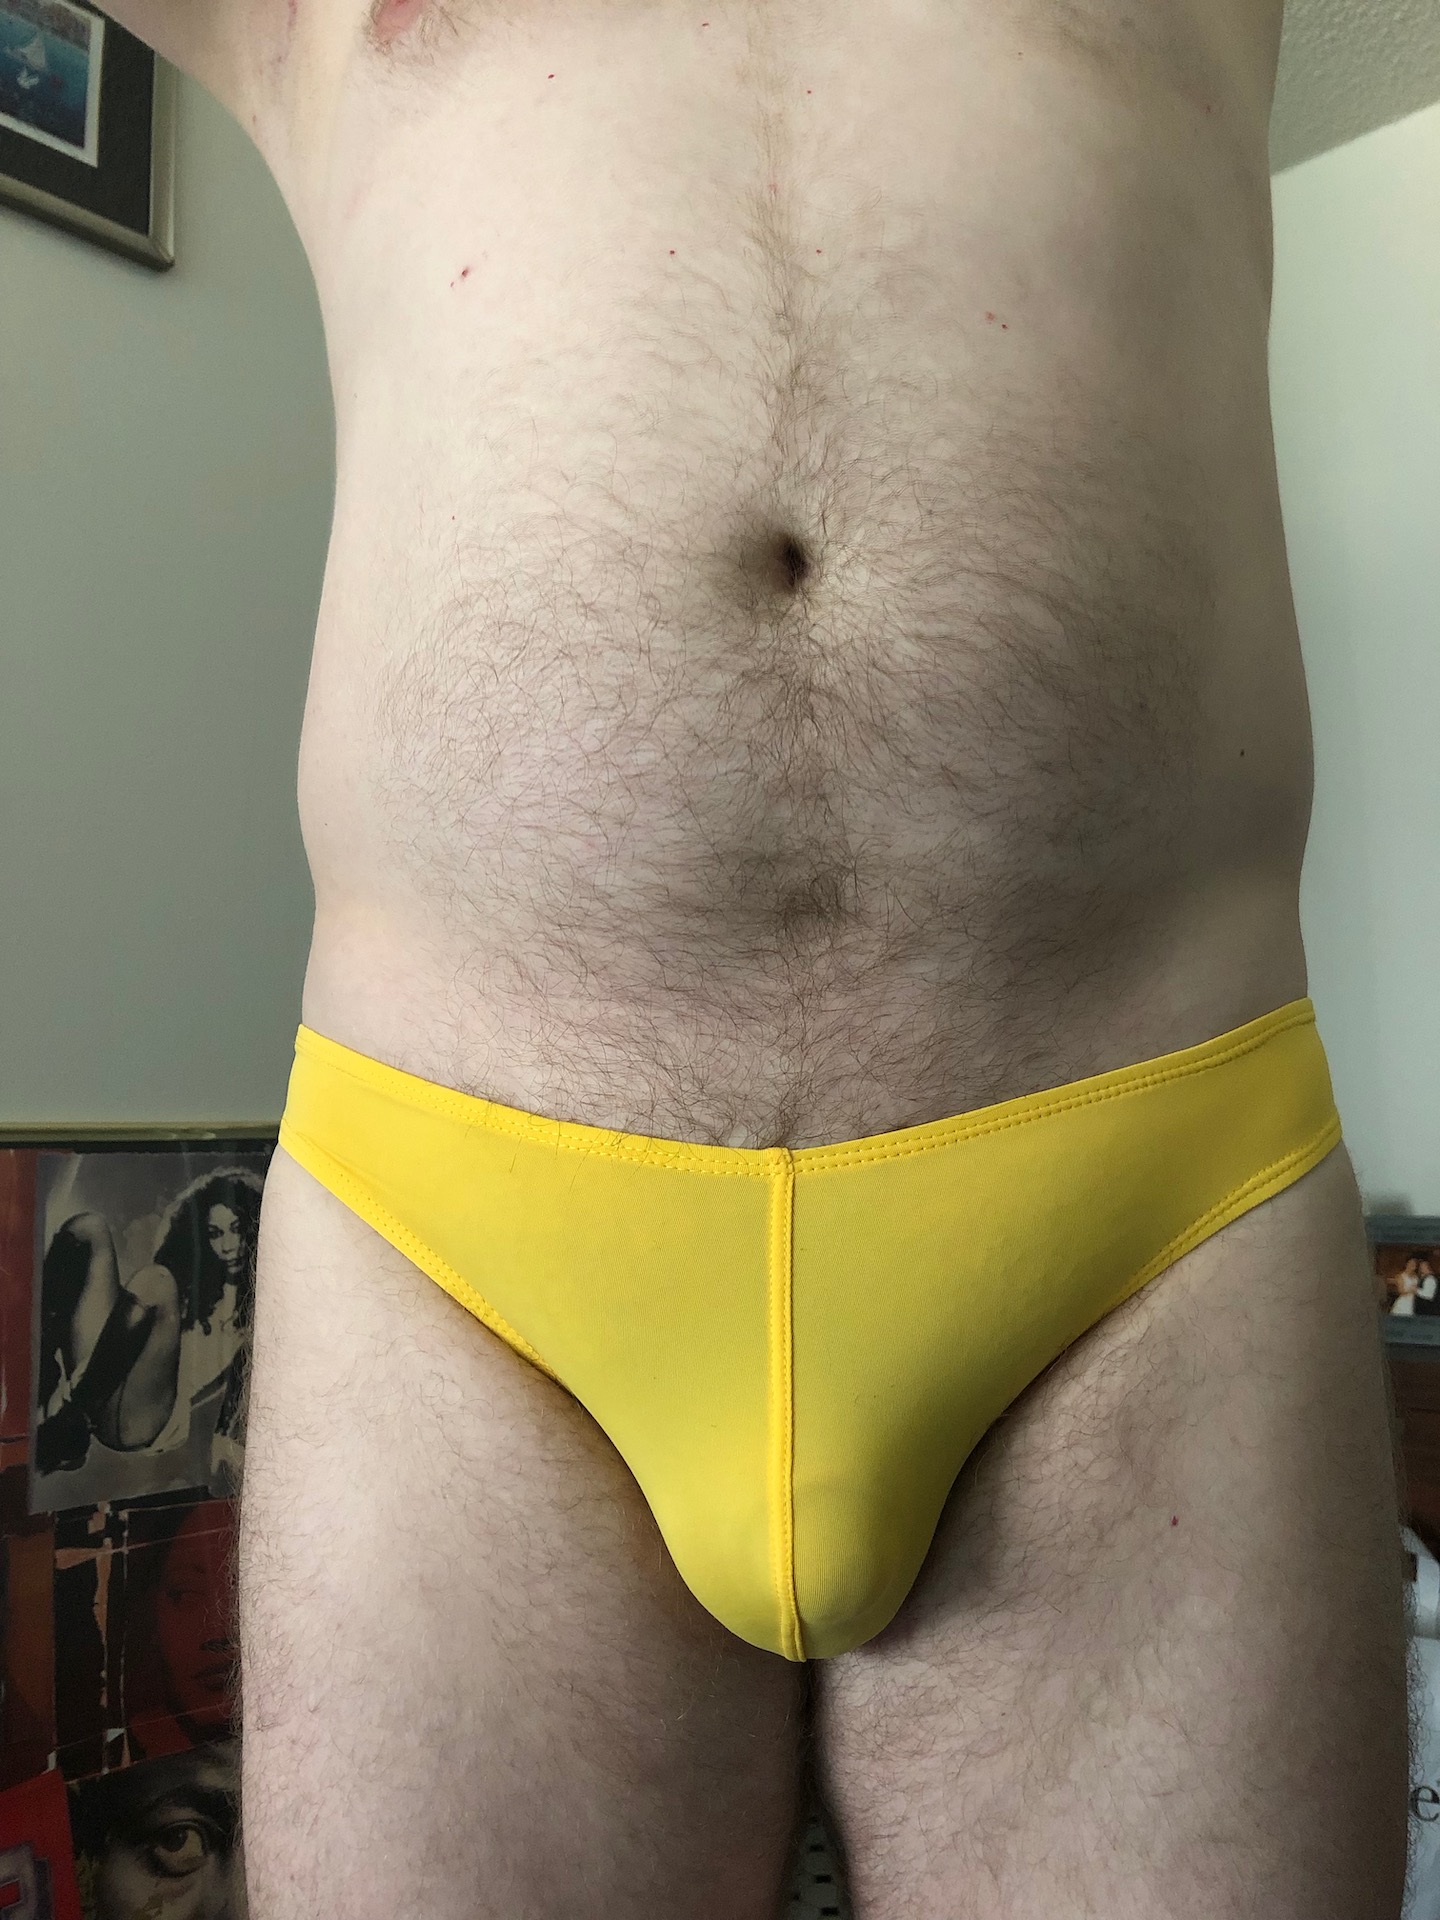 Be Choice bright yellow bikinis are my choice today…